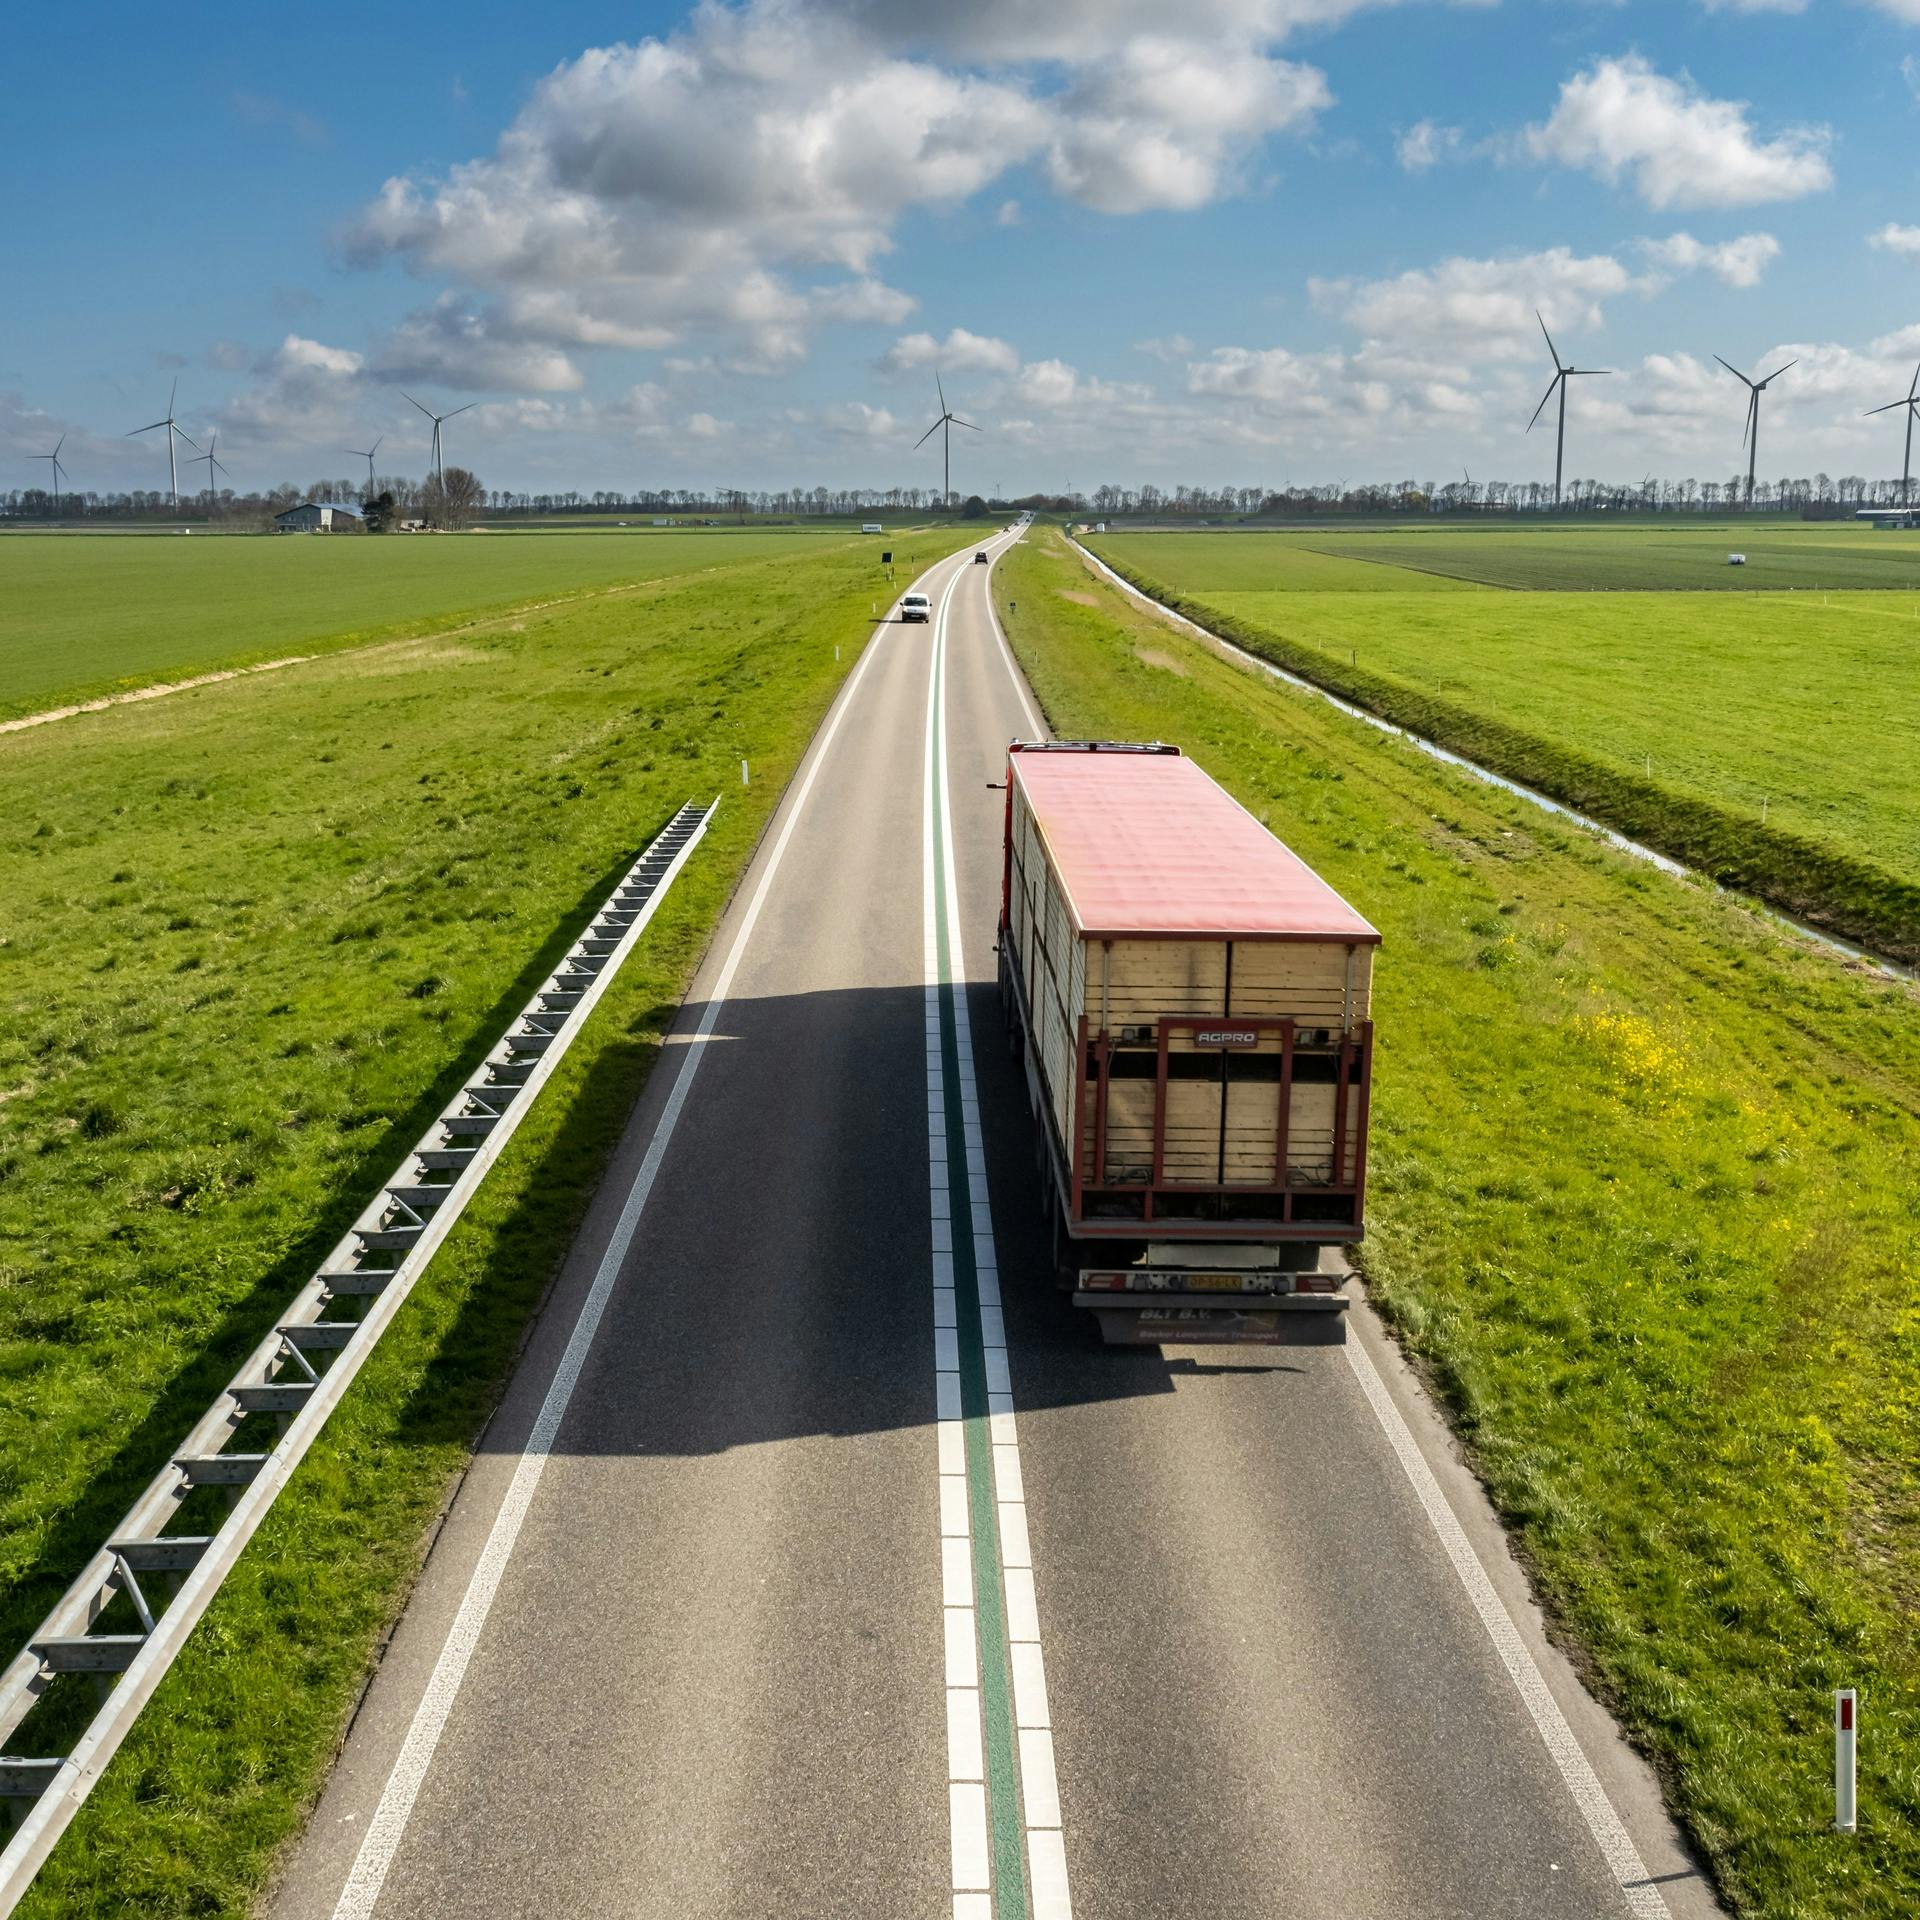 Hogere vrachtwagenheffing moet transport efficiënter maken